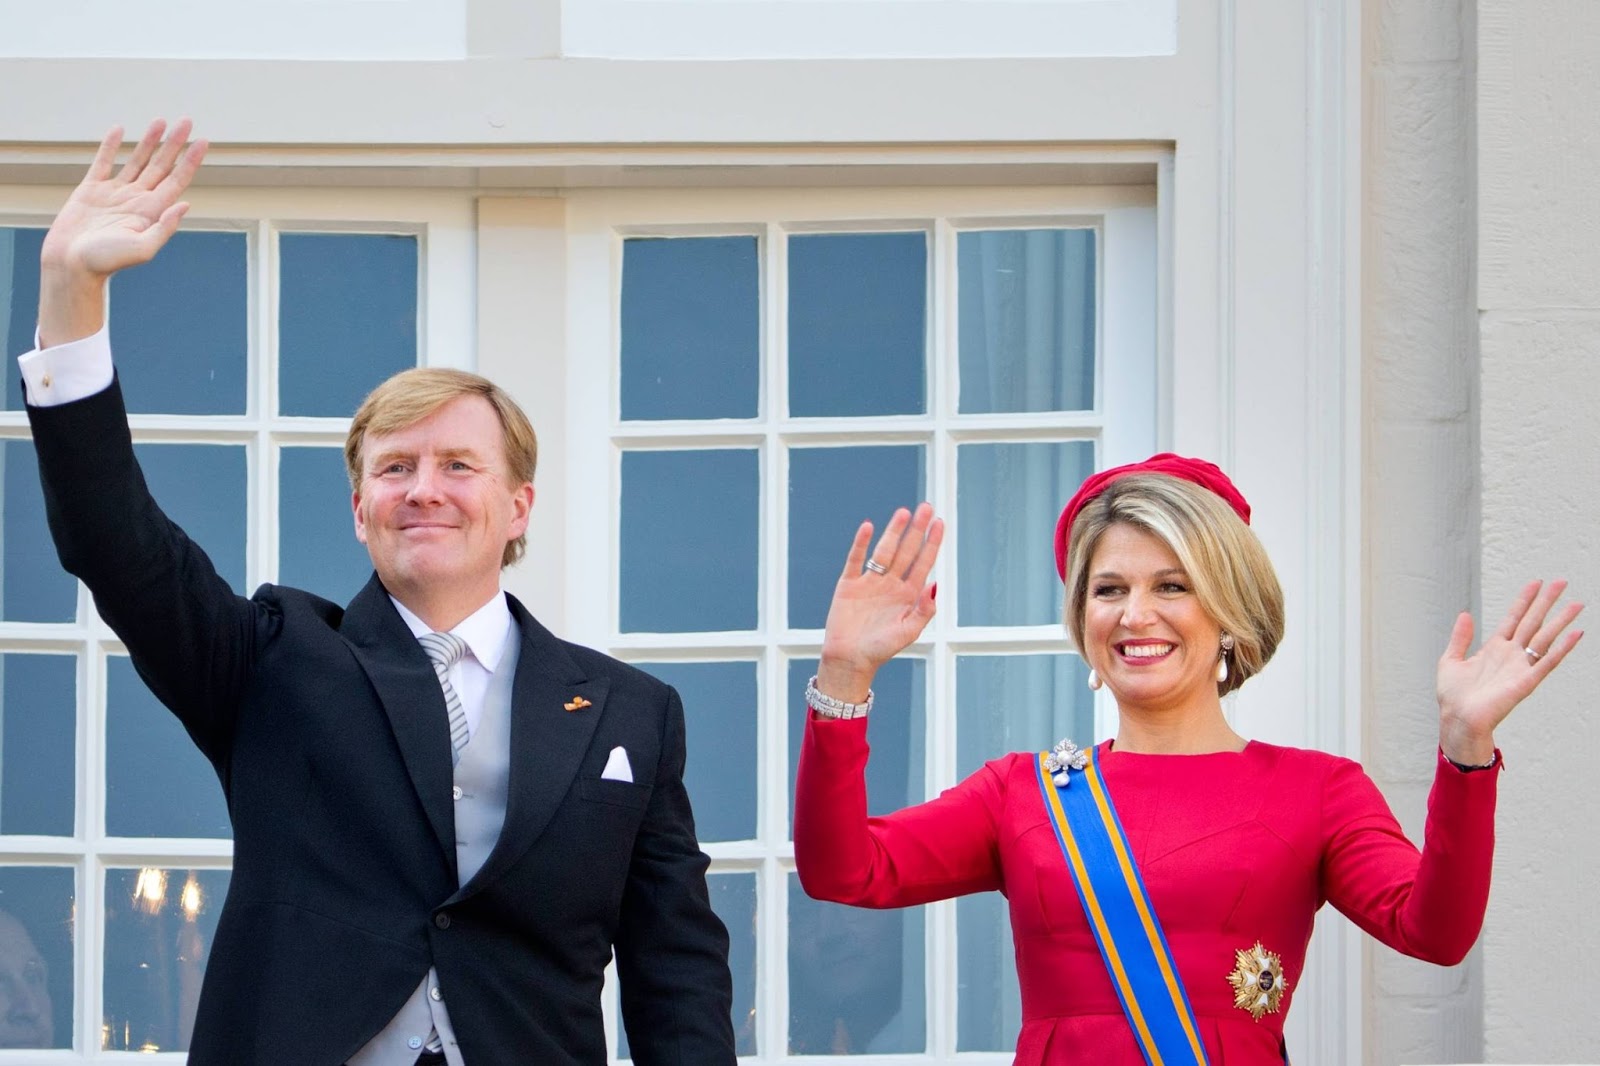 King Willem-Alexander, Queen Maxima, Prince Constantijn and Princess Laurentien at the balcony of Palace Noordeinde after the Prinsjesdag ceremony